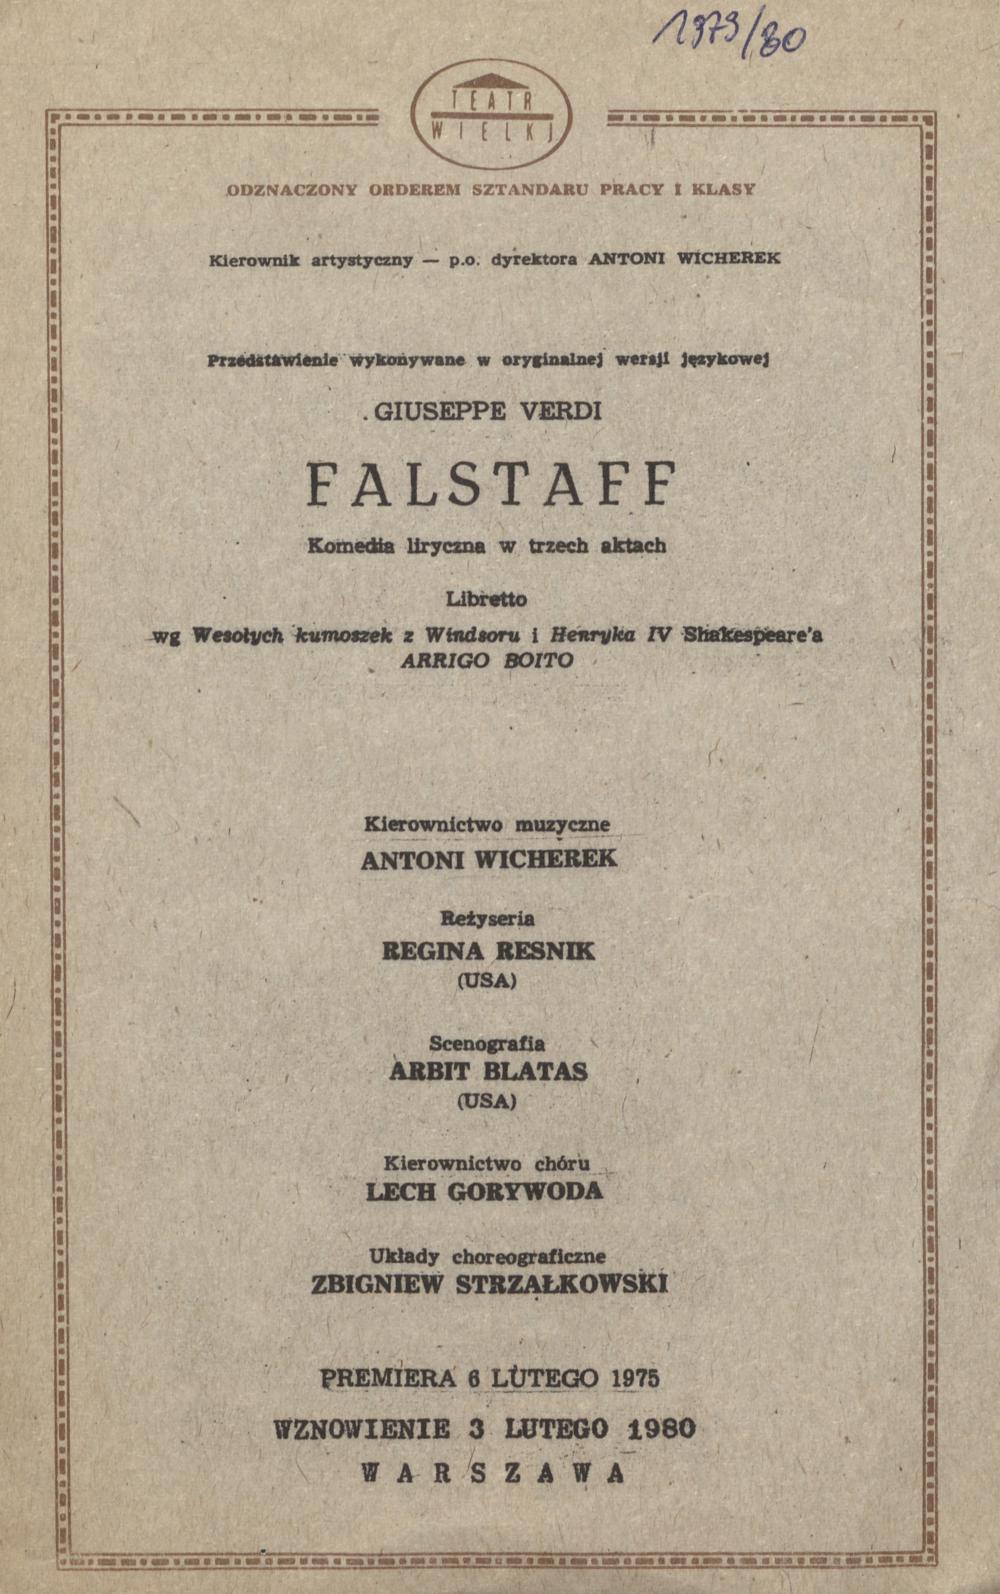 Wkładka obsadowa „Falstaff” Giuseppe Verdi 18-03-1980